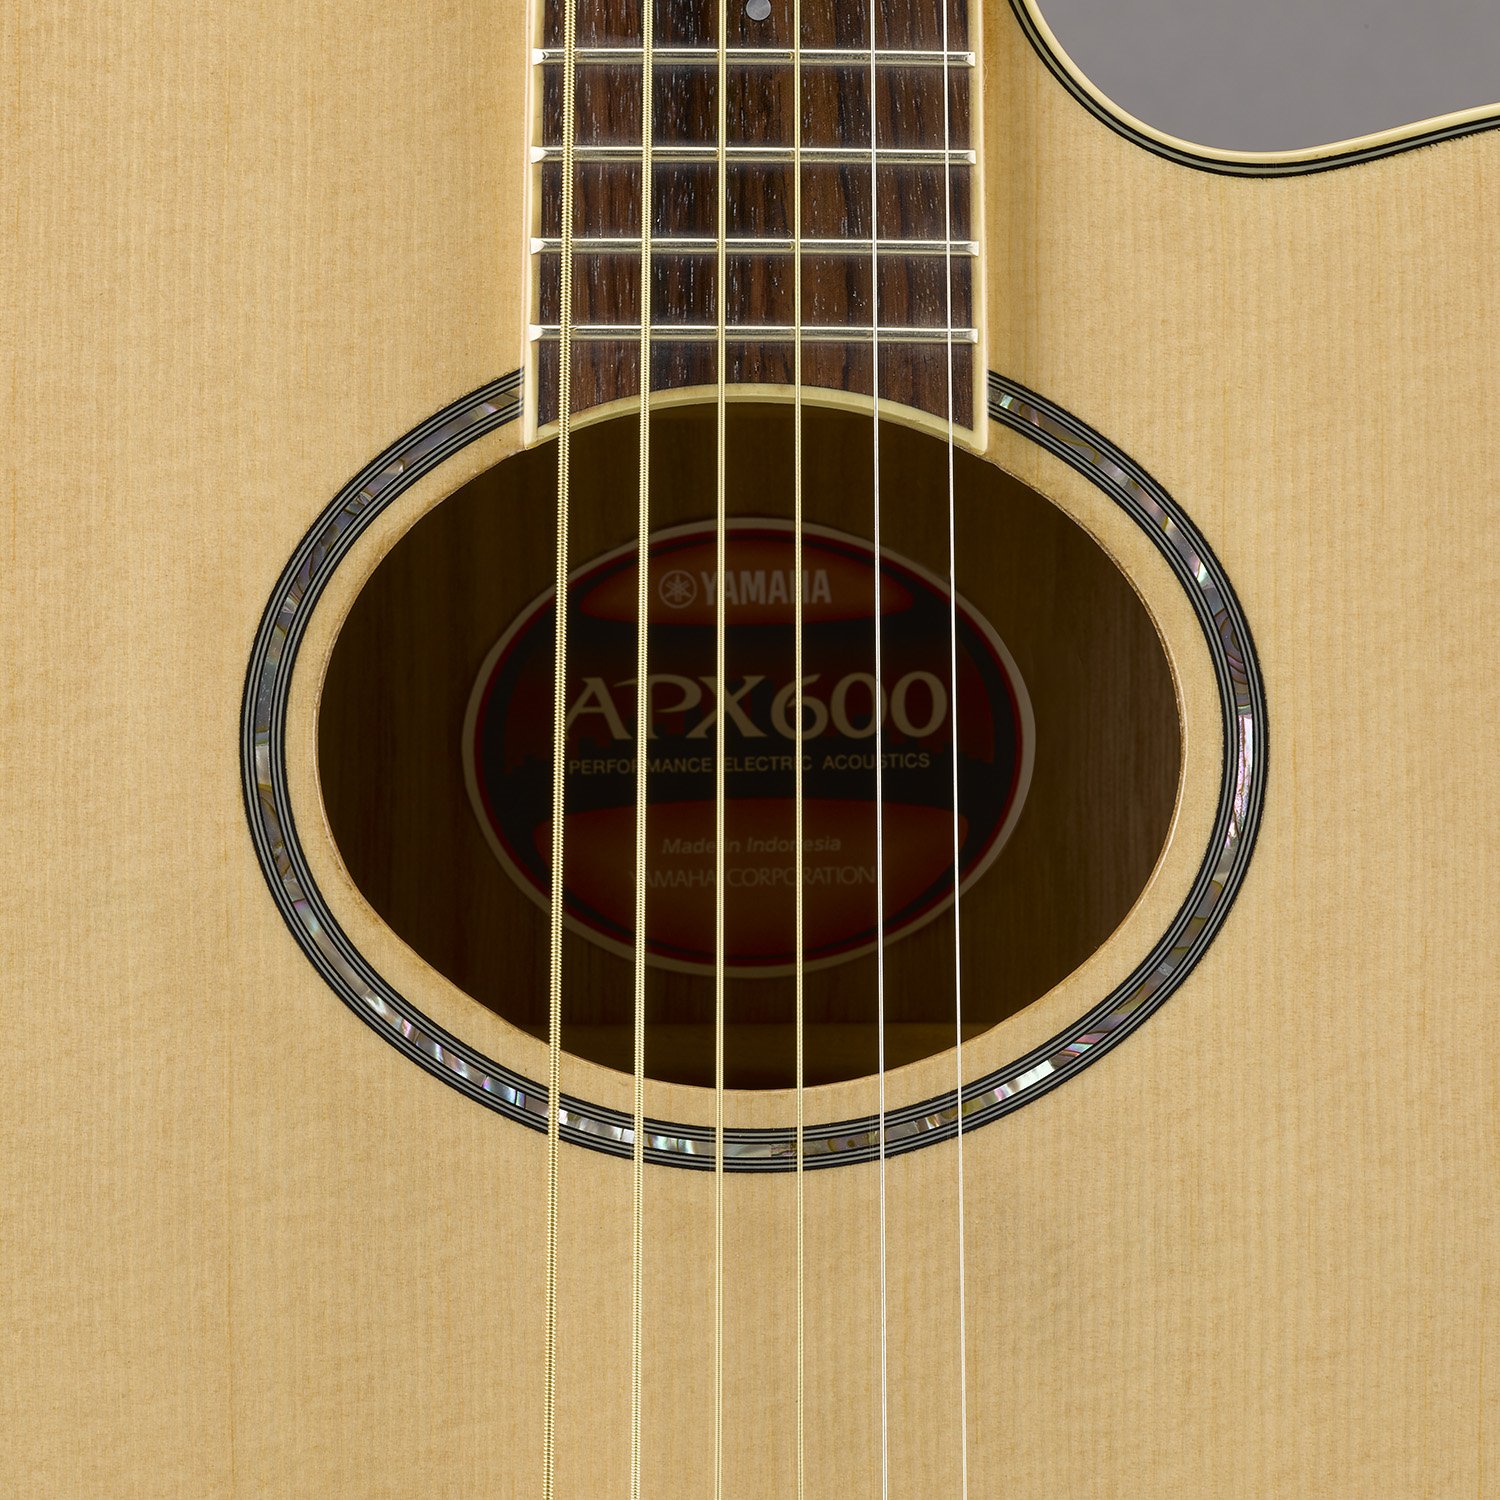 Yamaha Apx600 - Natural - Electro acoustic guitar - Variation 2